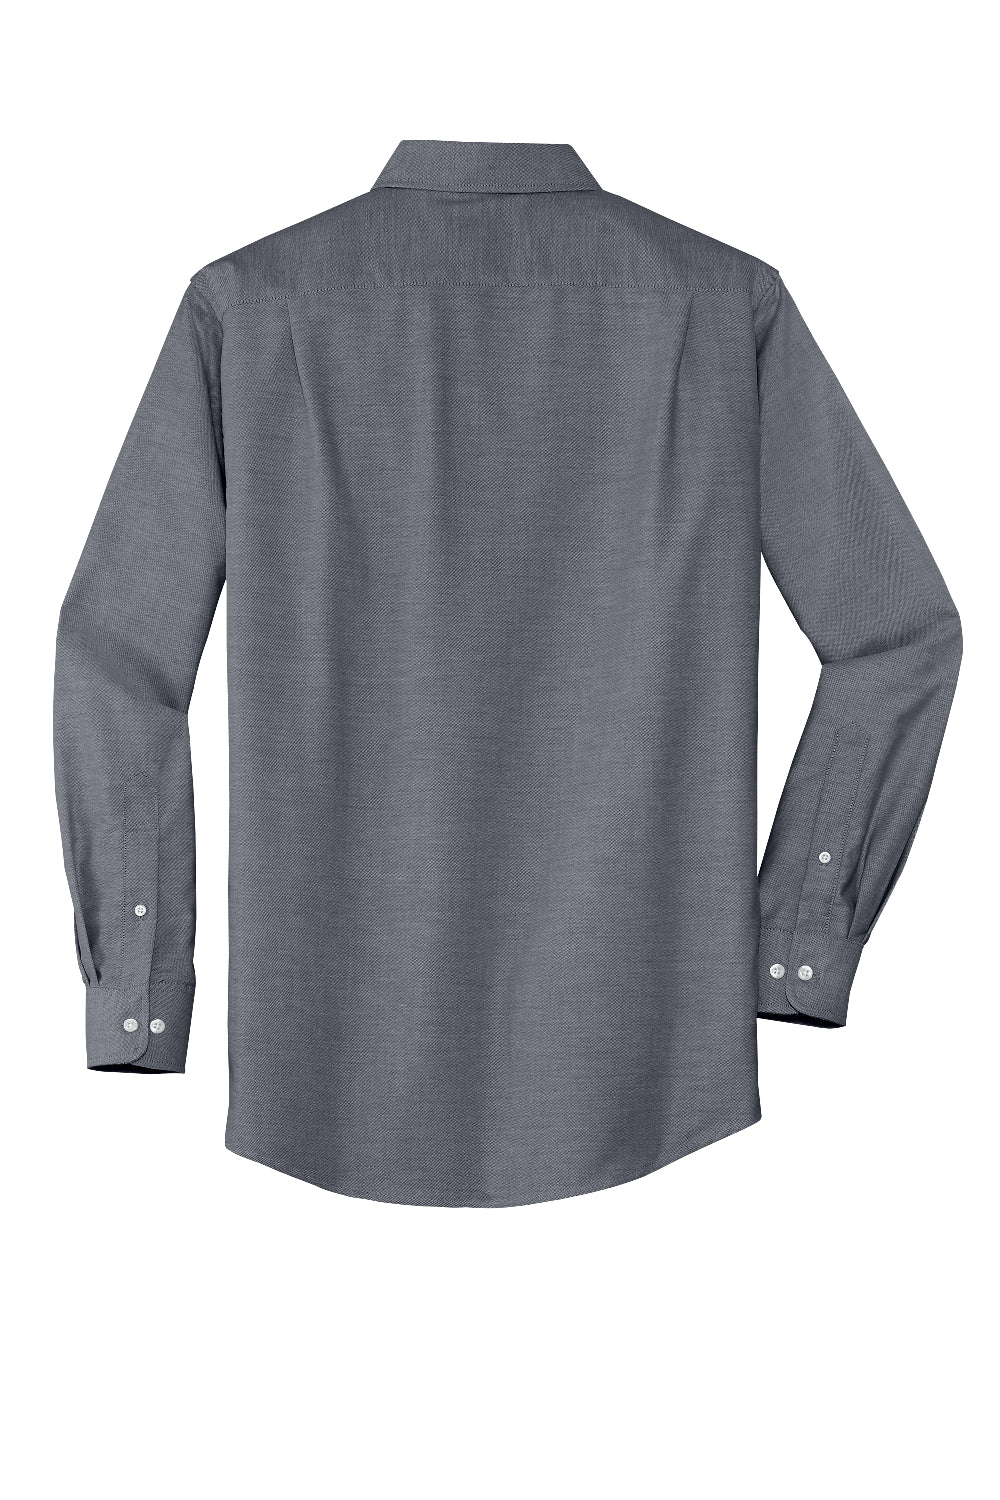 Port Authority S658/TS658 SuperPro Oxford Wrinkle Resistant Long Sleeve Button Down Shirt w/ Pocket Black Flat Back